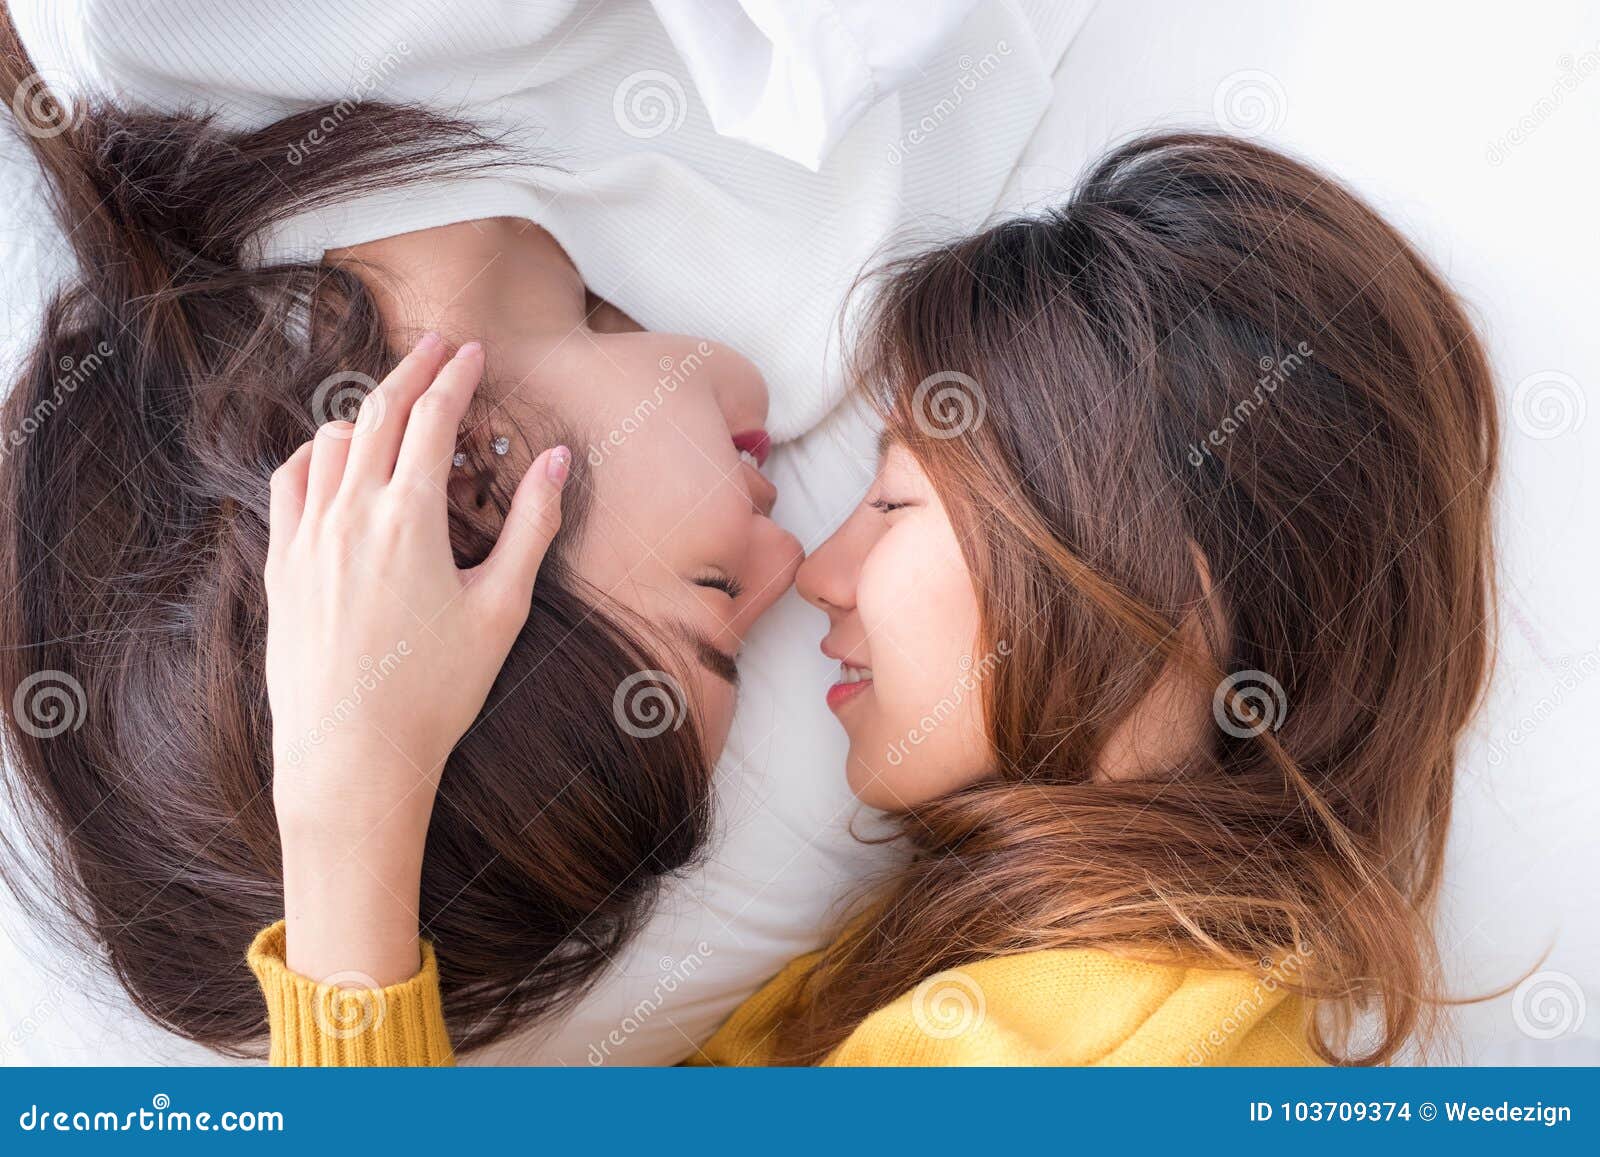 cute asian lesbian kiss